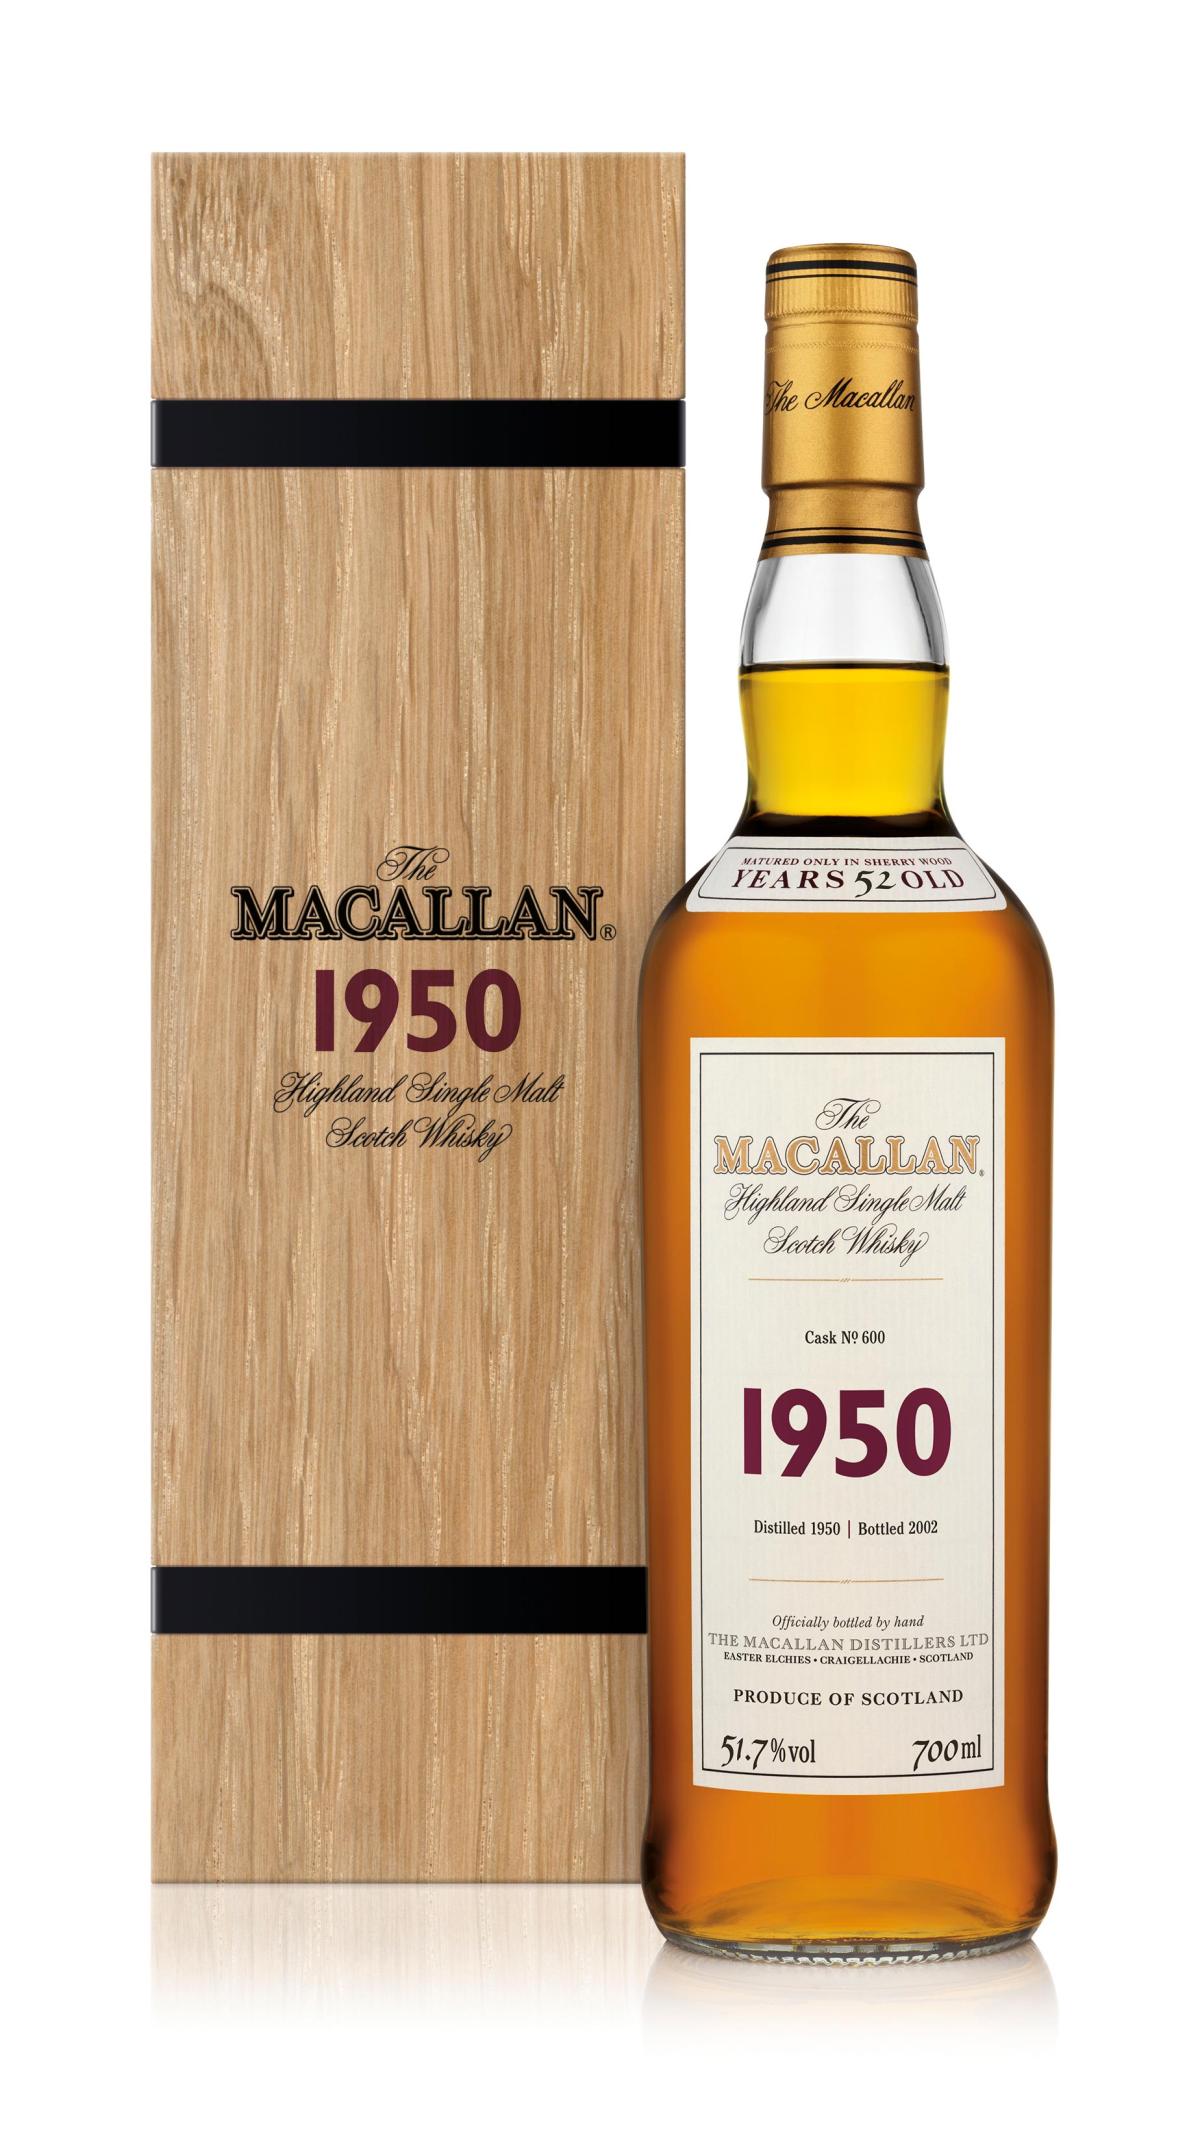 MACALLAN FINE AND RARE SCOTCH SINGLE MALT CASK 600 1950 750ML (PRESALE)